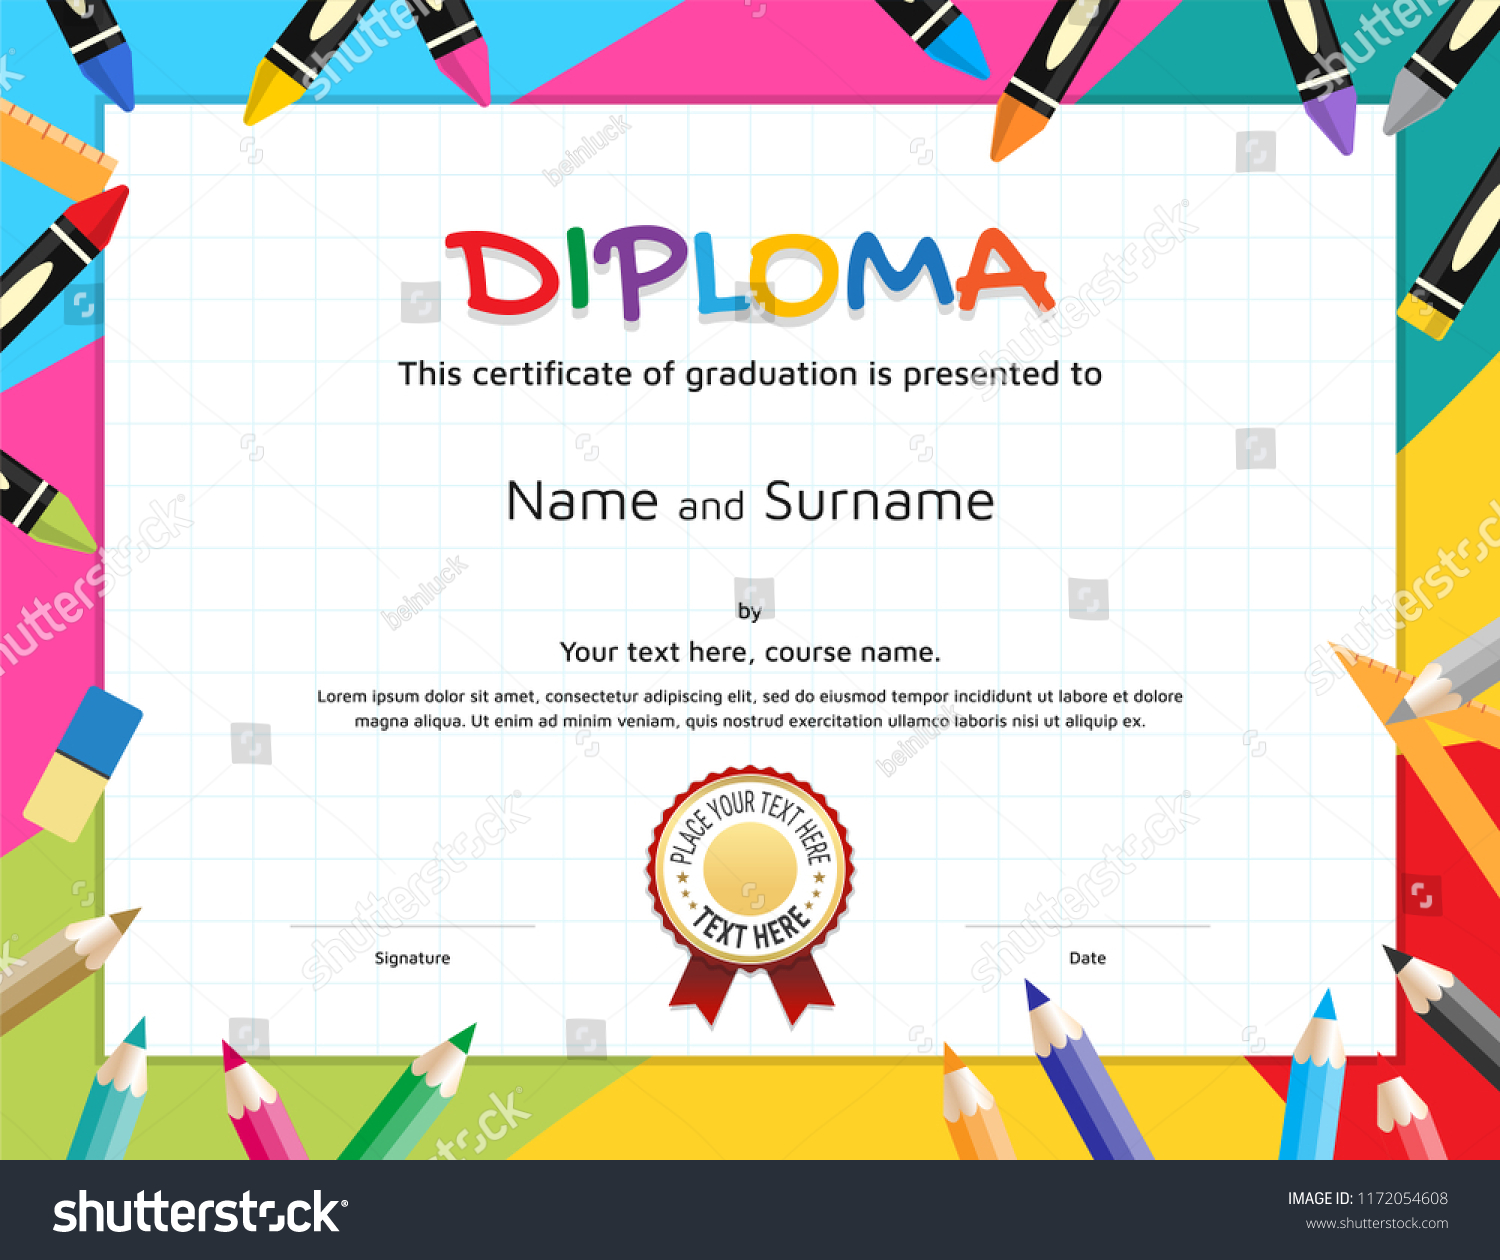 Kids Diploma Certificate Template Painting Stuff เวกเตอร์สต็อก ปลอด